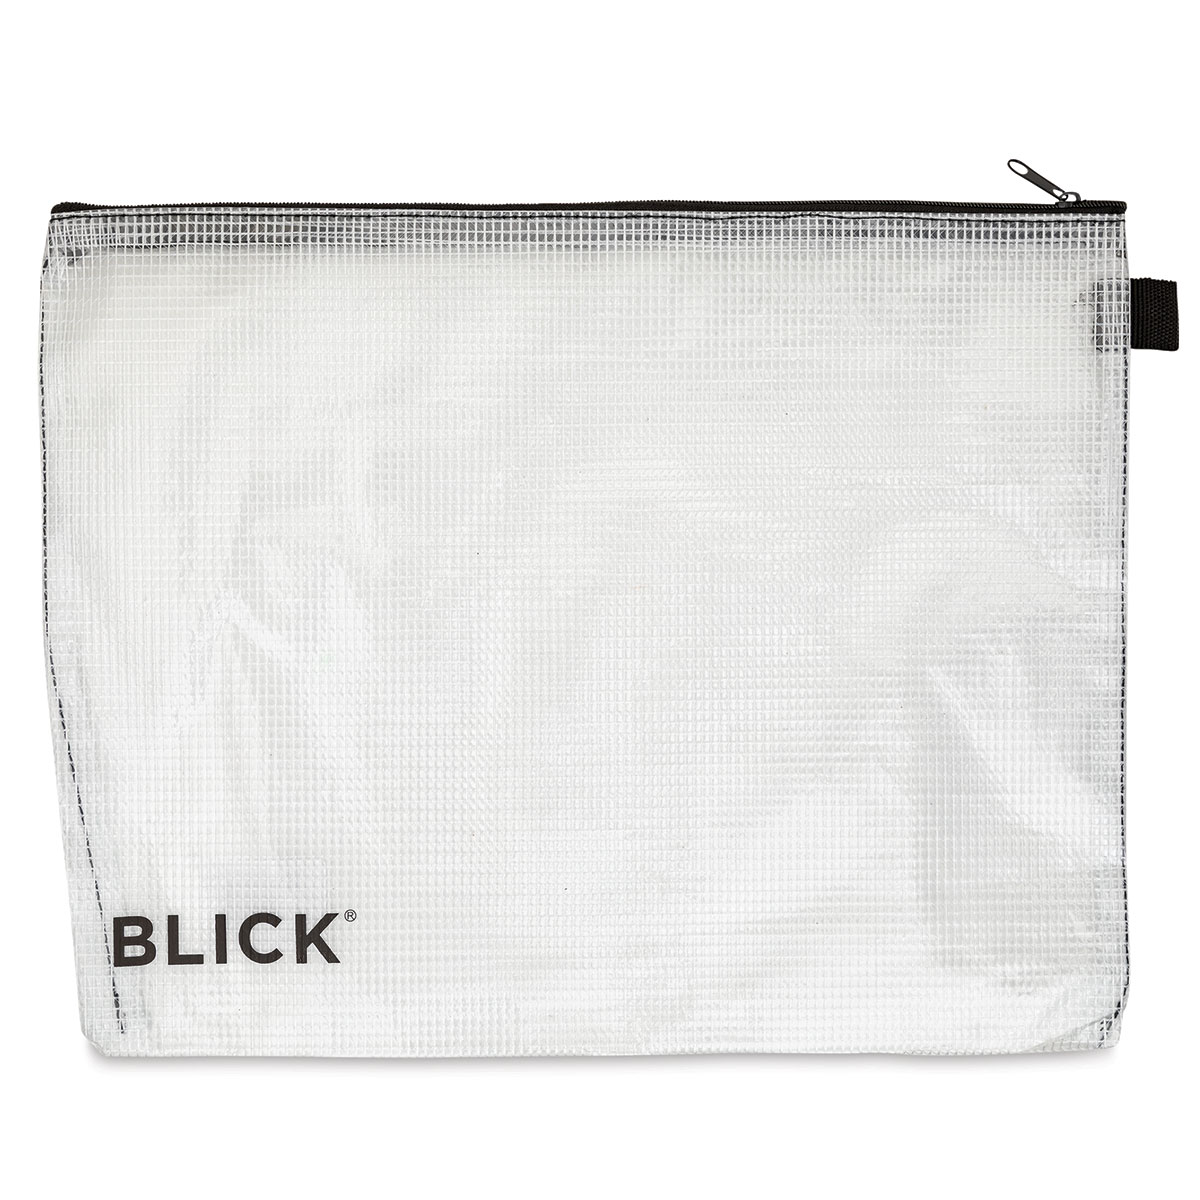 Blick Mesh Zipper Bag - 12 x 16